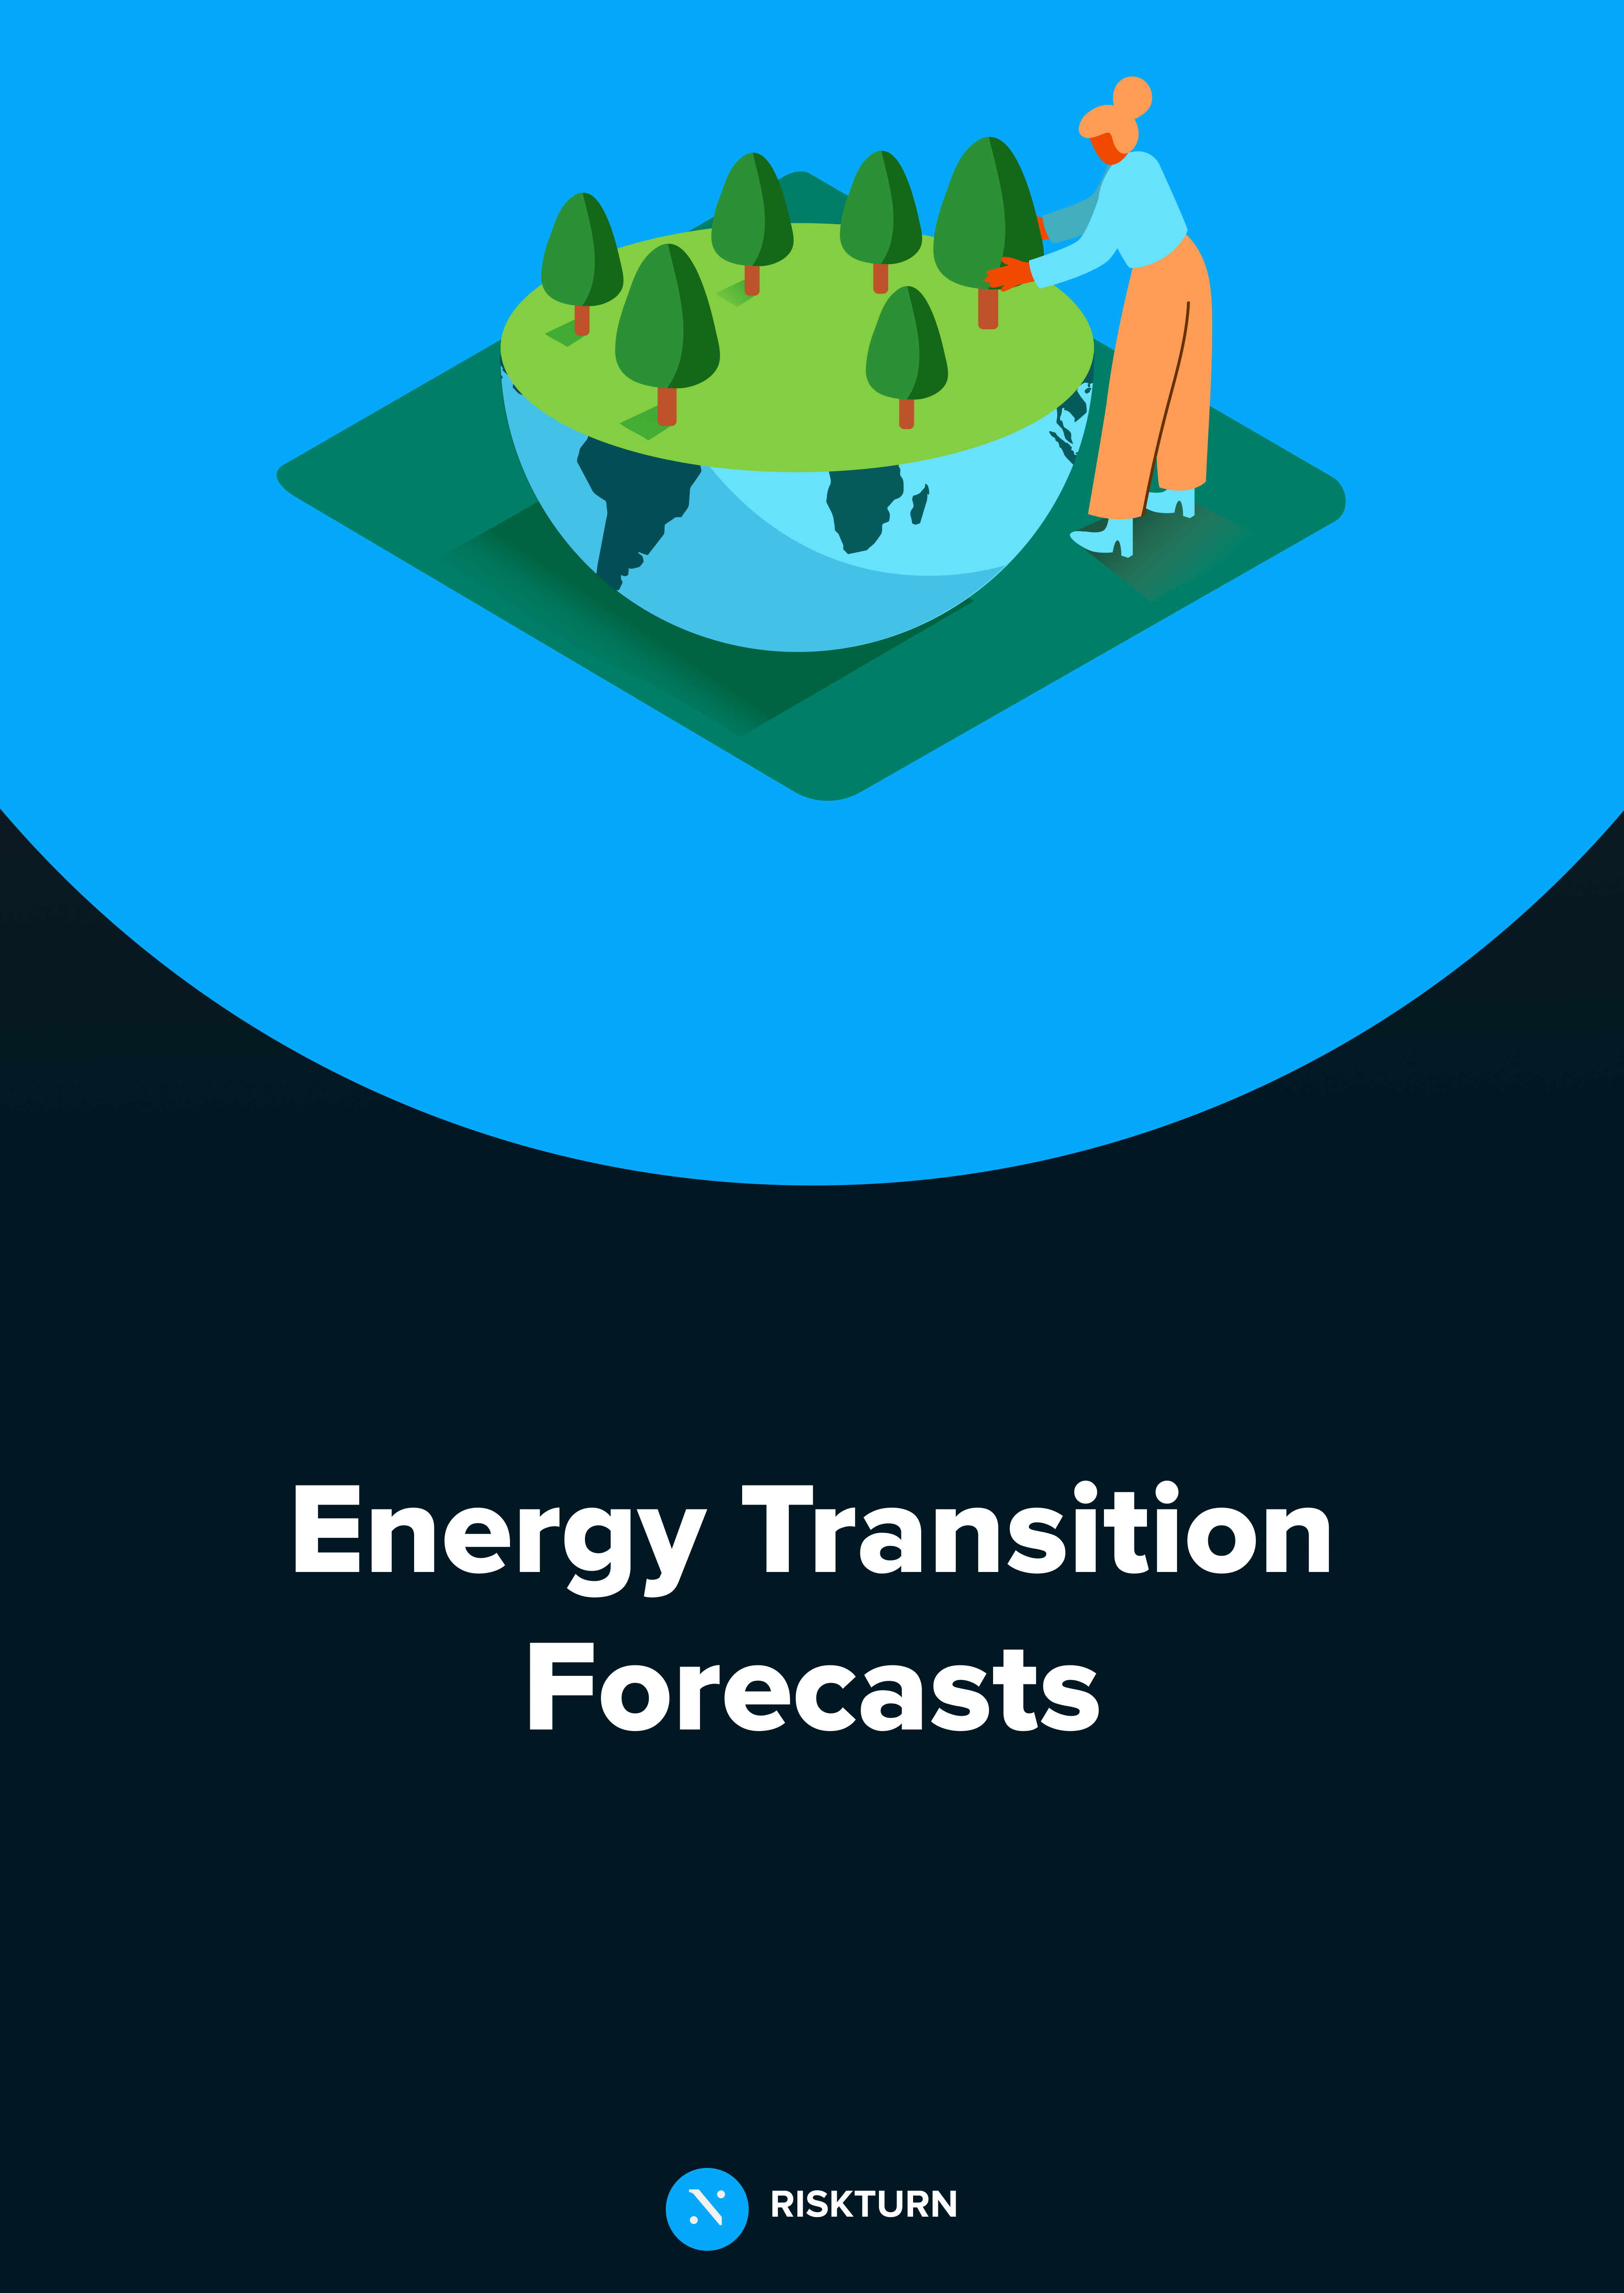 Energytransition_forescast